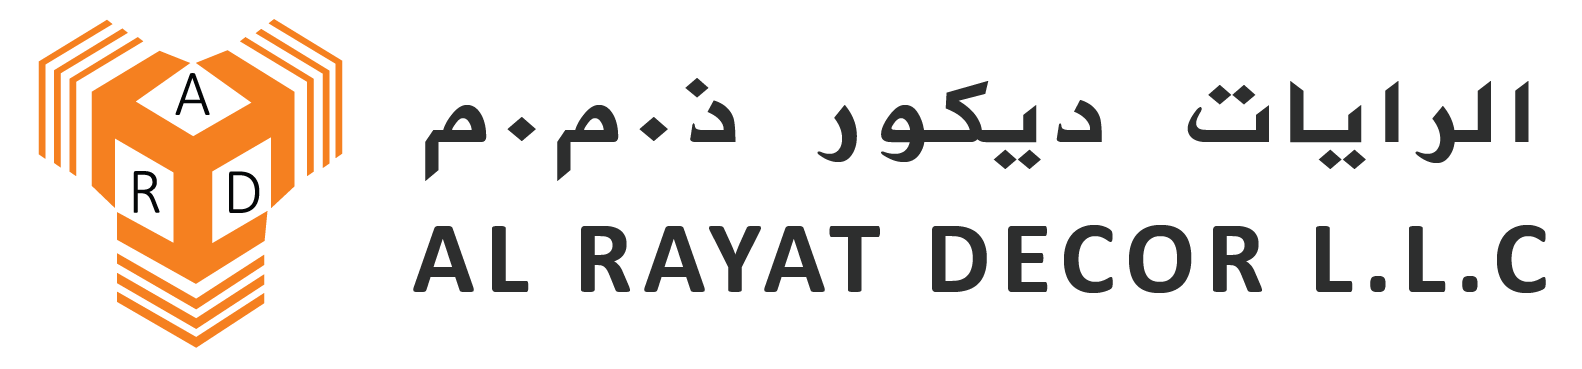 Al Rayat Decor